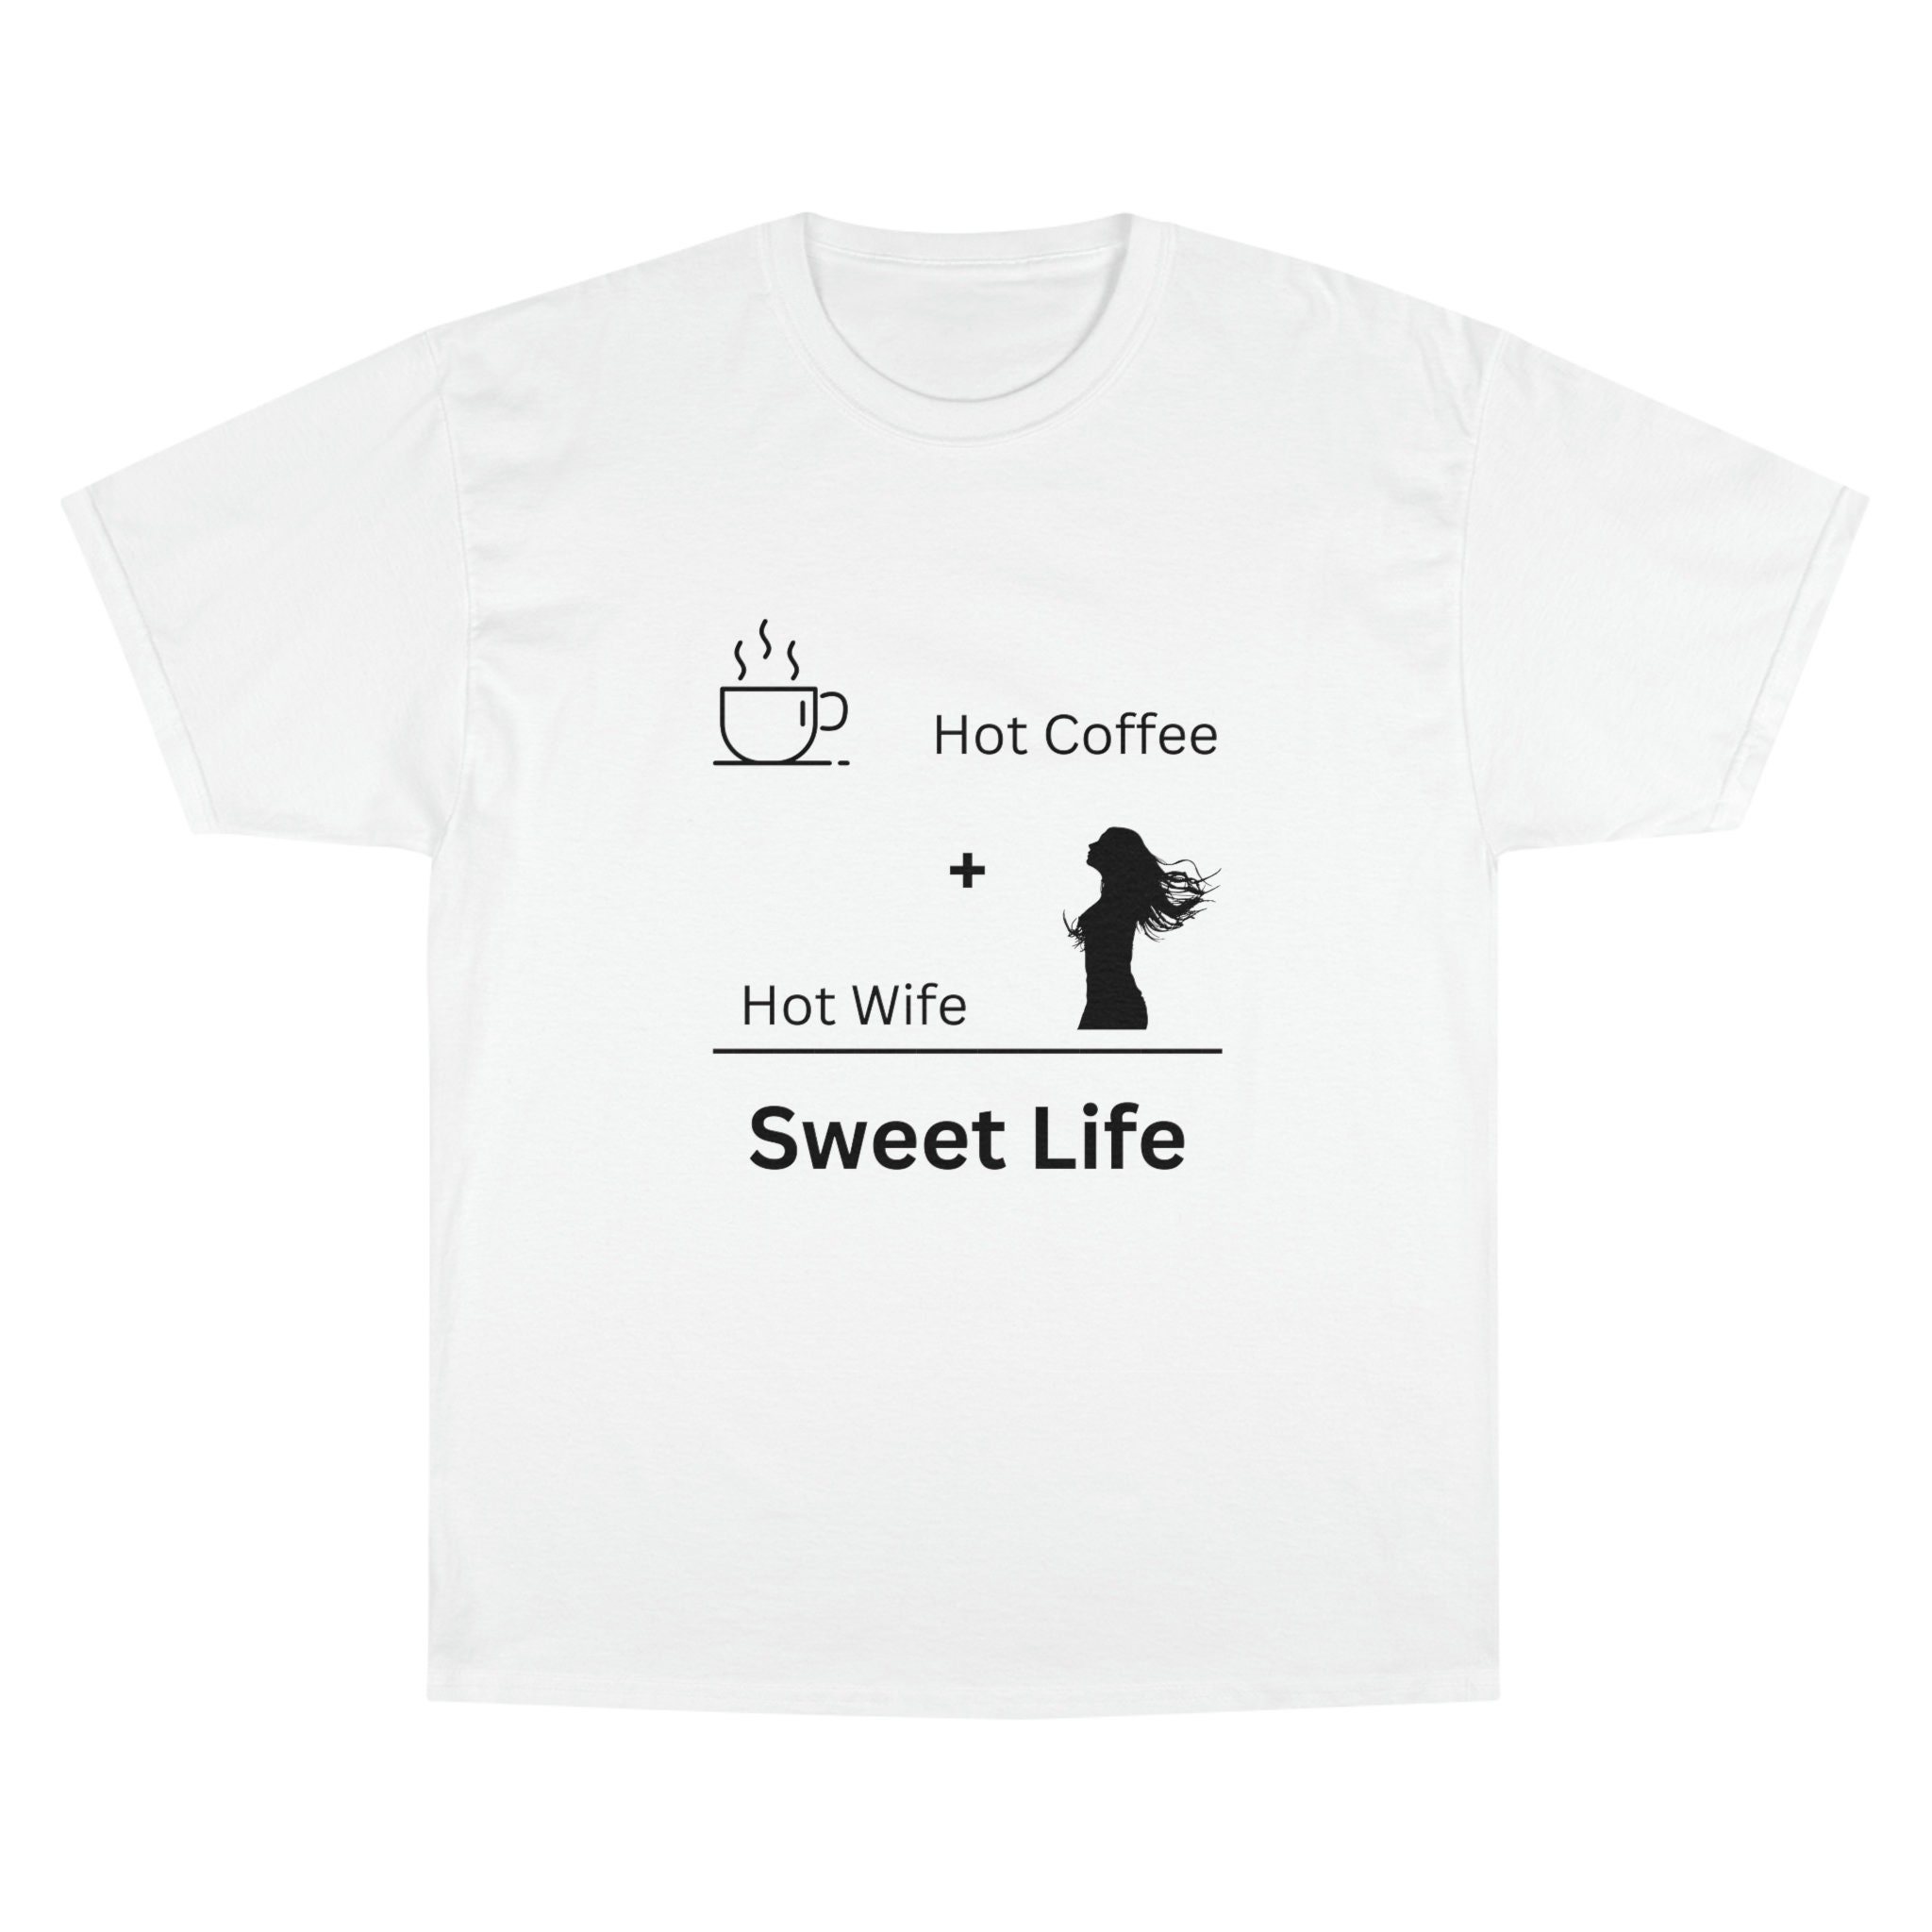 Sunshine and Sweet Tea T-shirt, Birthday Gifts, Tea Graphic Tshirt for  Women, Sweet Tea Shirt, Womens Gifts, Sunshine and Sweet Tea T-shirt 